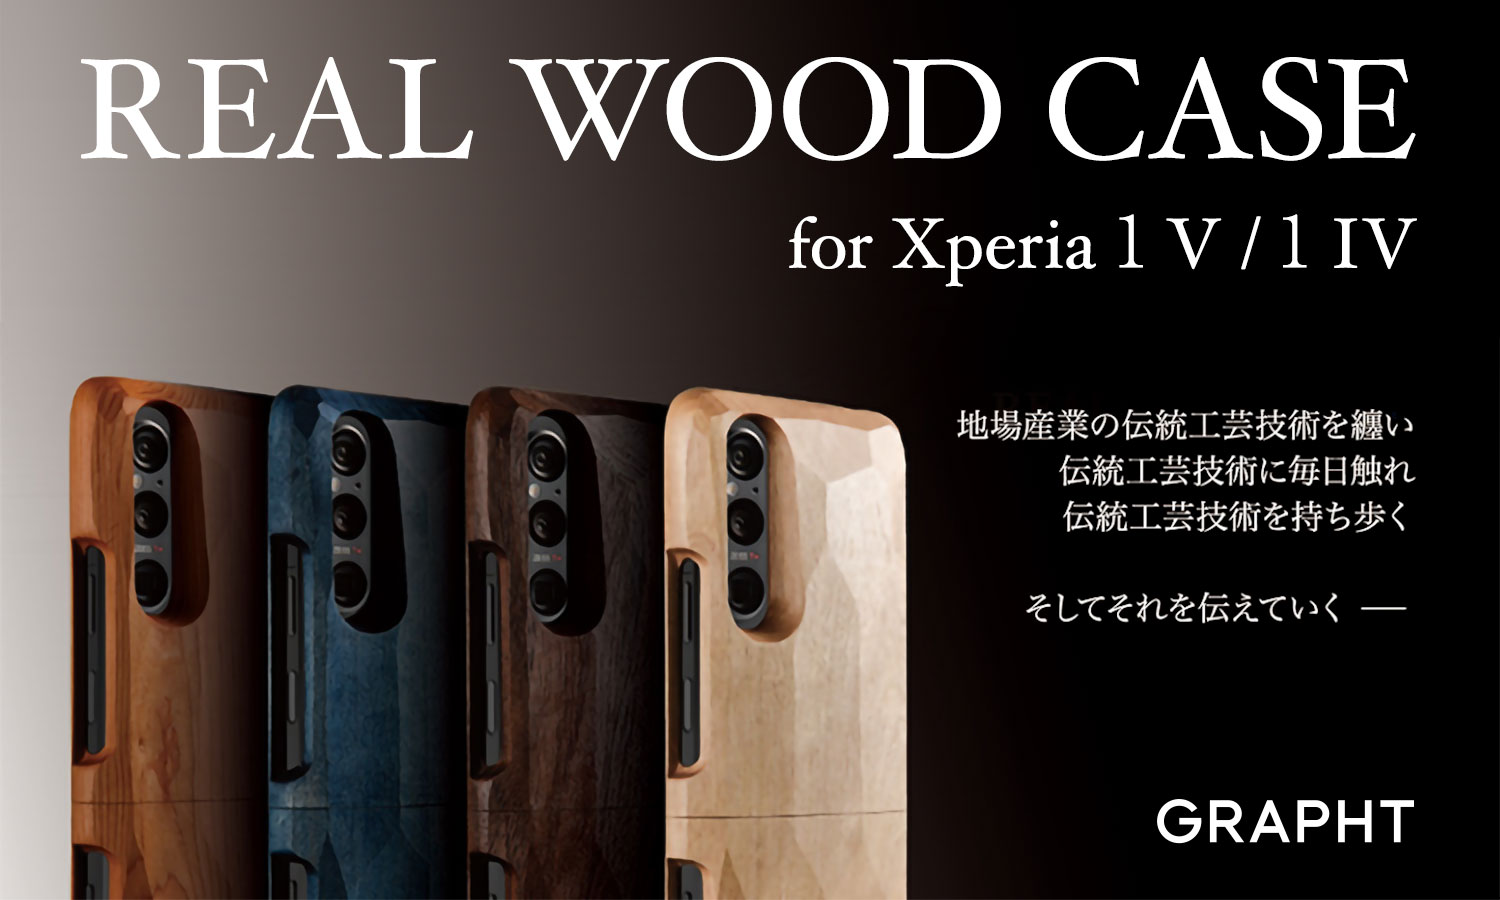 REAL WOOD CASE for Xperia 1 V / 1 IV 地場産業の伝統工芸技術を纏い 伝統工芸技術に毎日触れ 伝統工芸技術を持ち歩く そしてそれを伝えていく −− GRAPHT